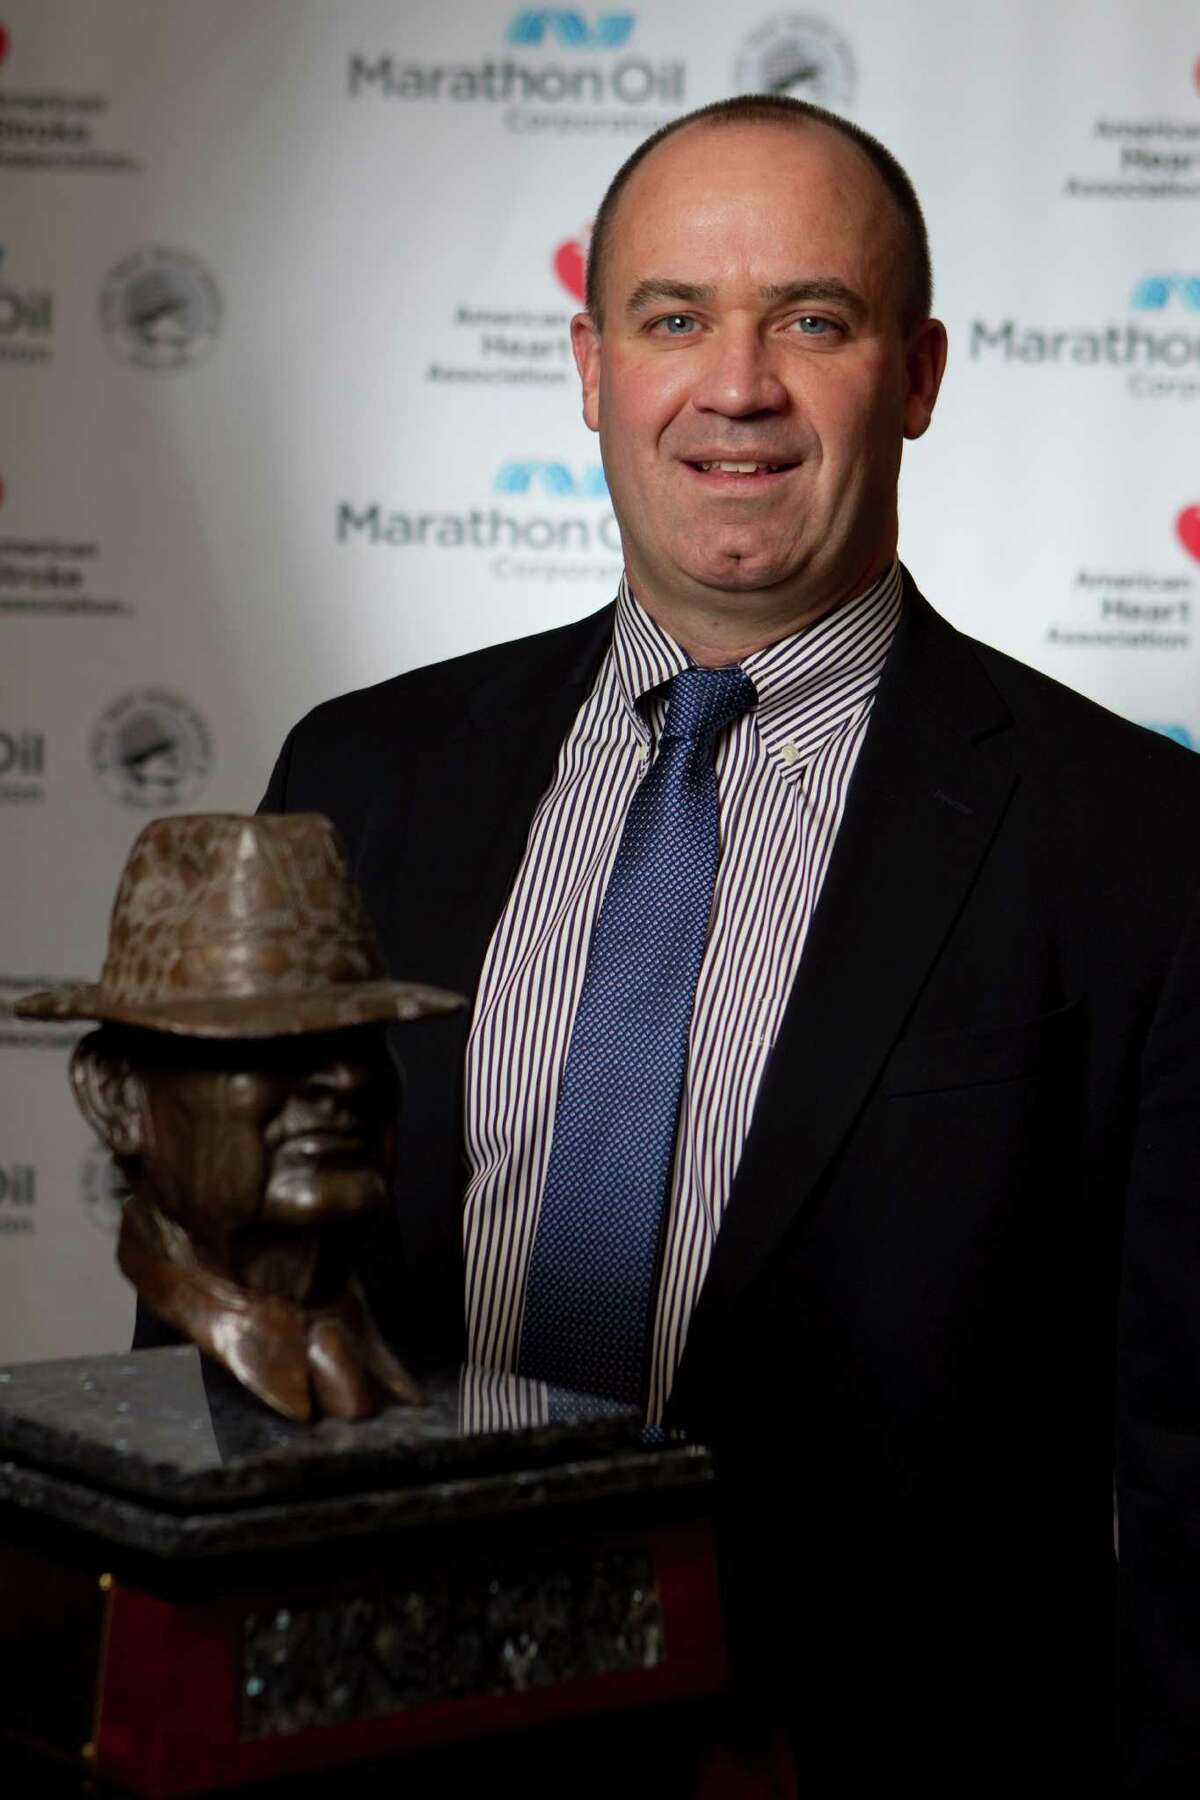 Penn State head coach Bill O' Brien won the 2013 Marathon Oil Corporation Paul 'Bear' Bryant Award. (Nick de la Torre/Houston Chronicle)